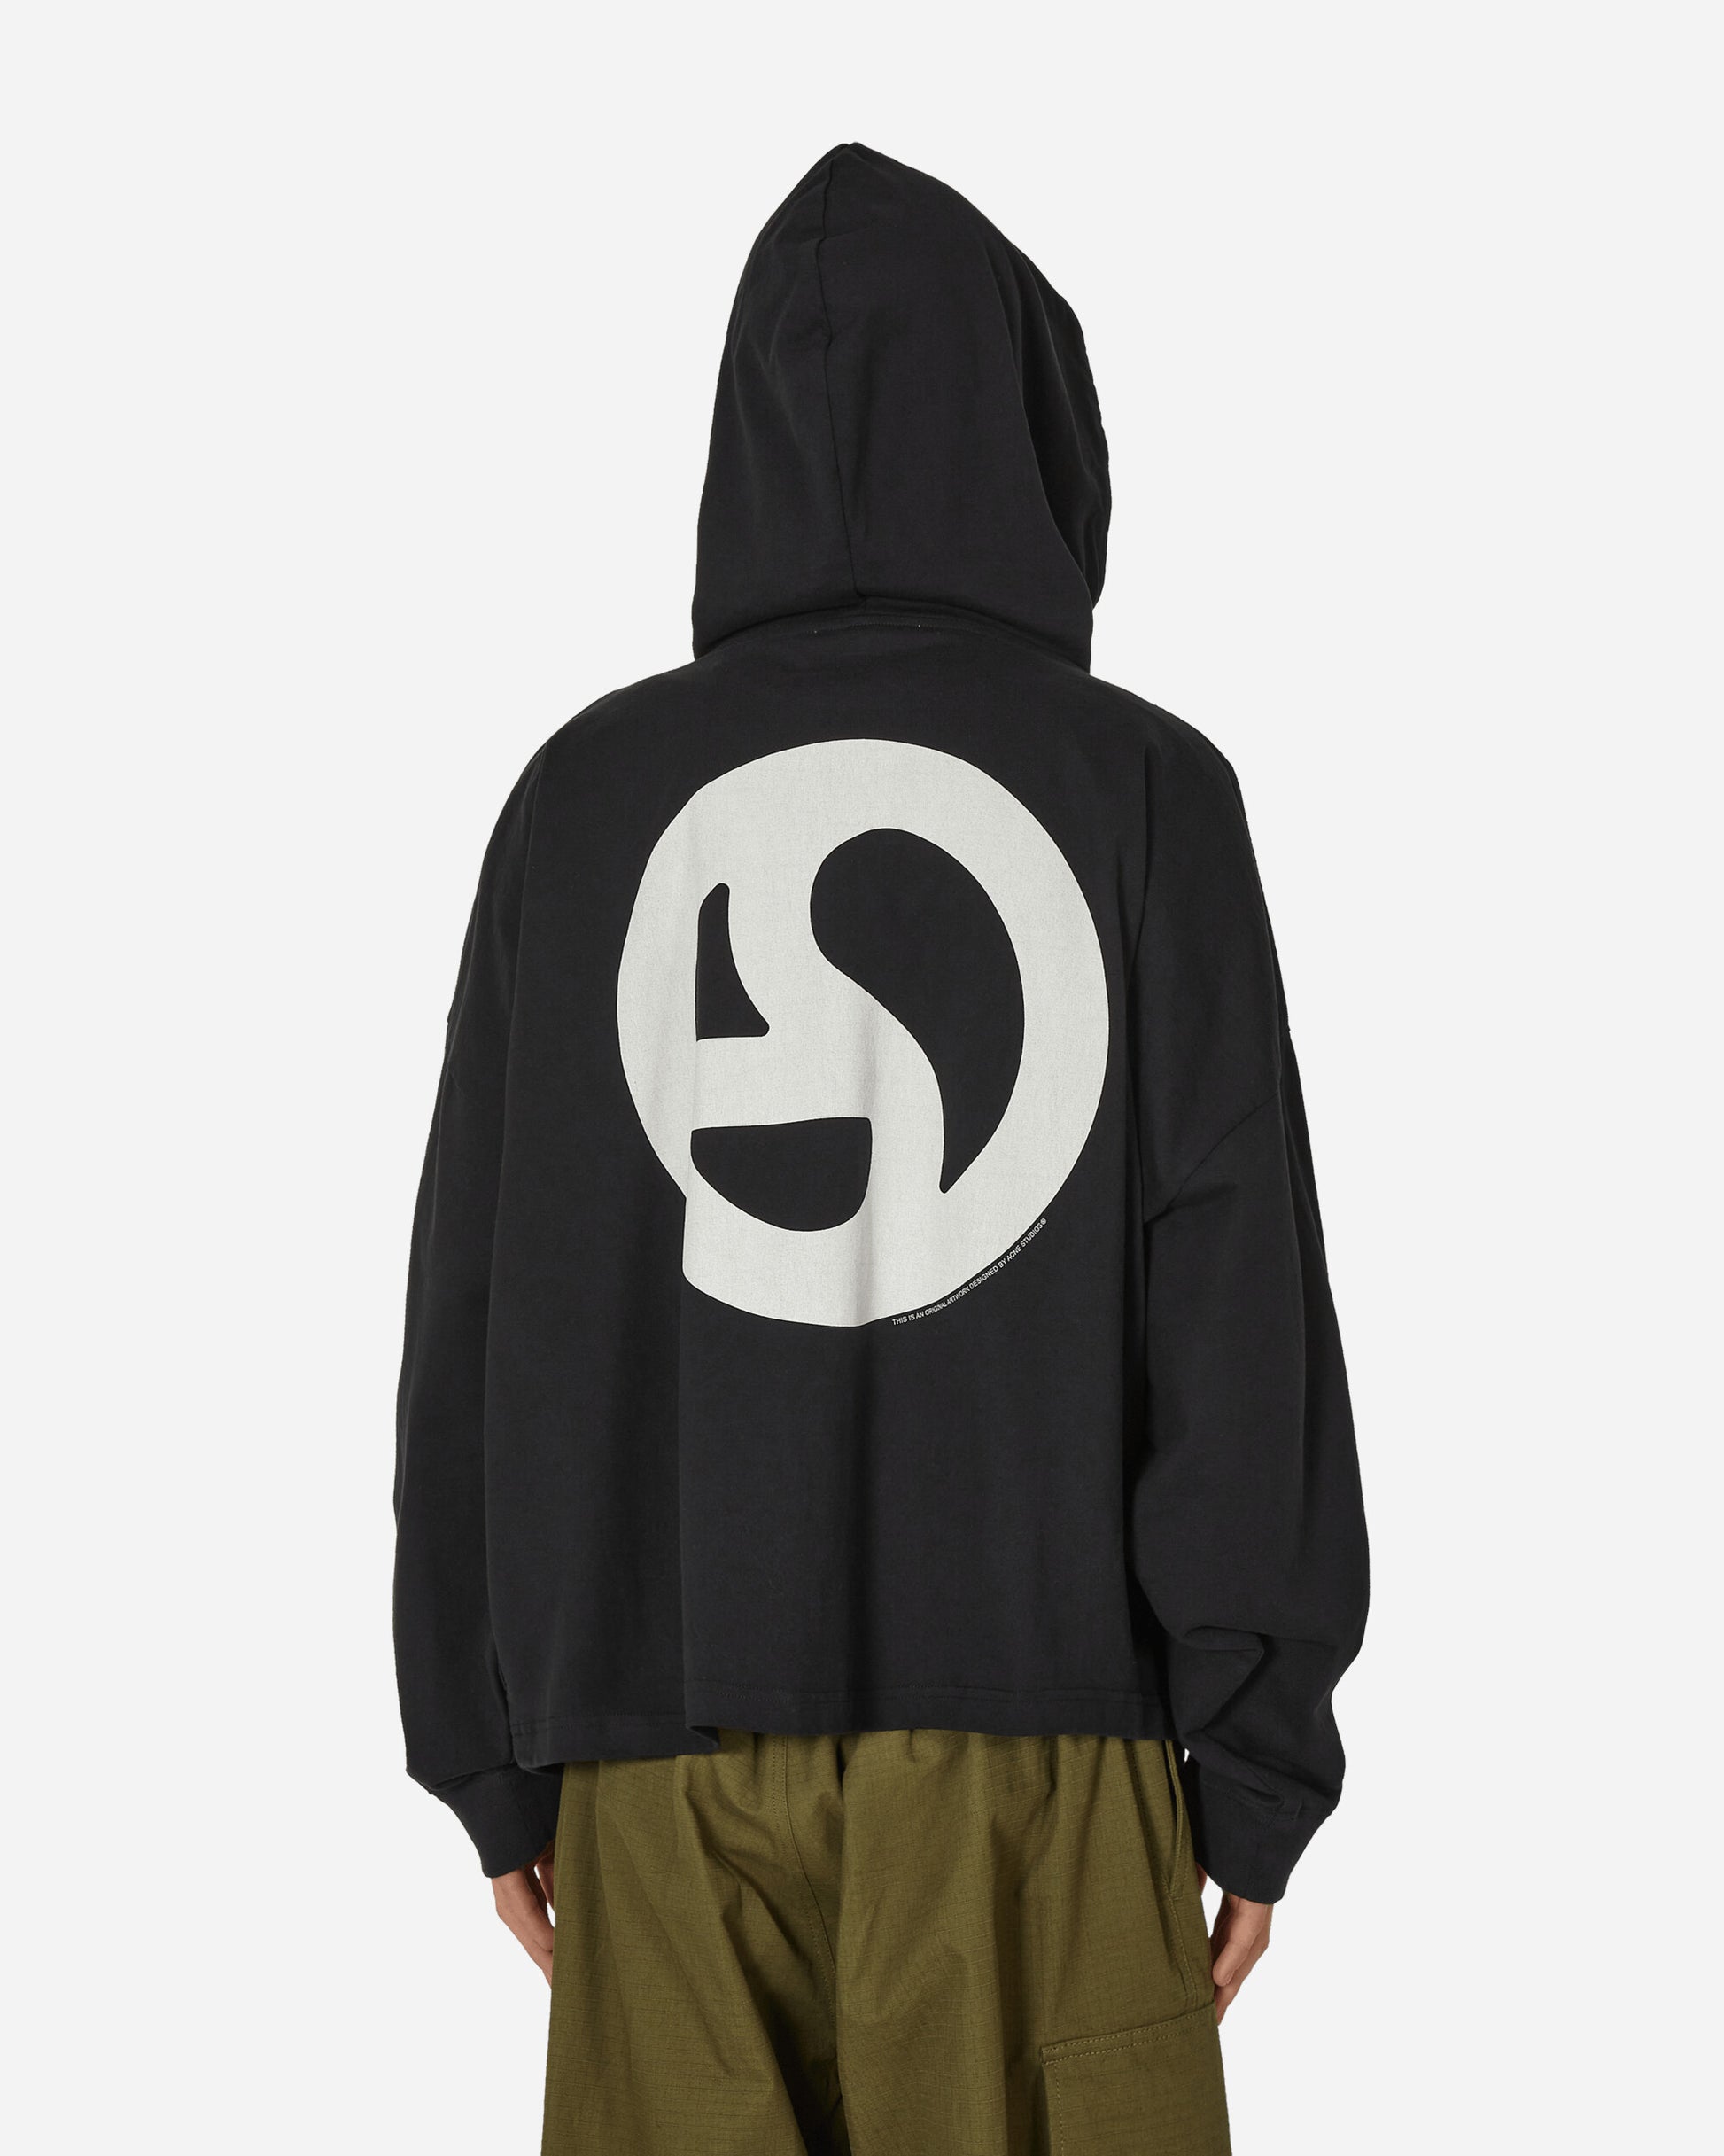 Acne Studios Hooded Sweatshirt Black Sweatshirts Hoodies CI0161- 900